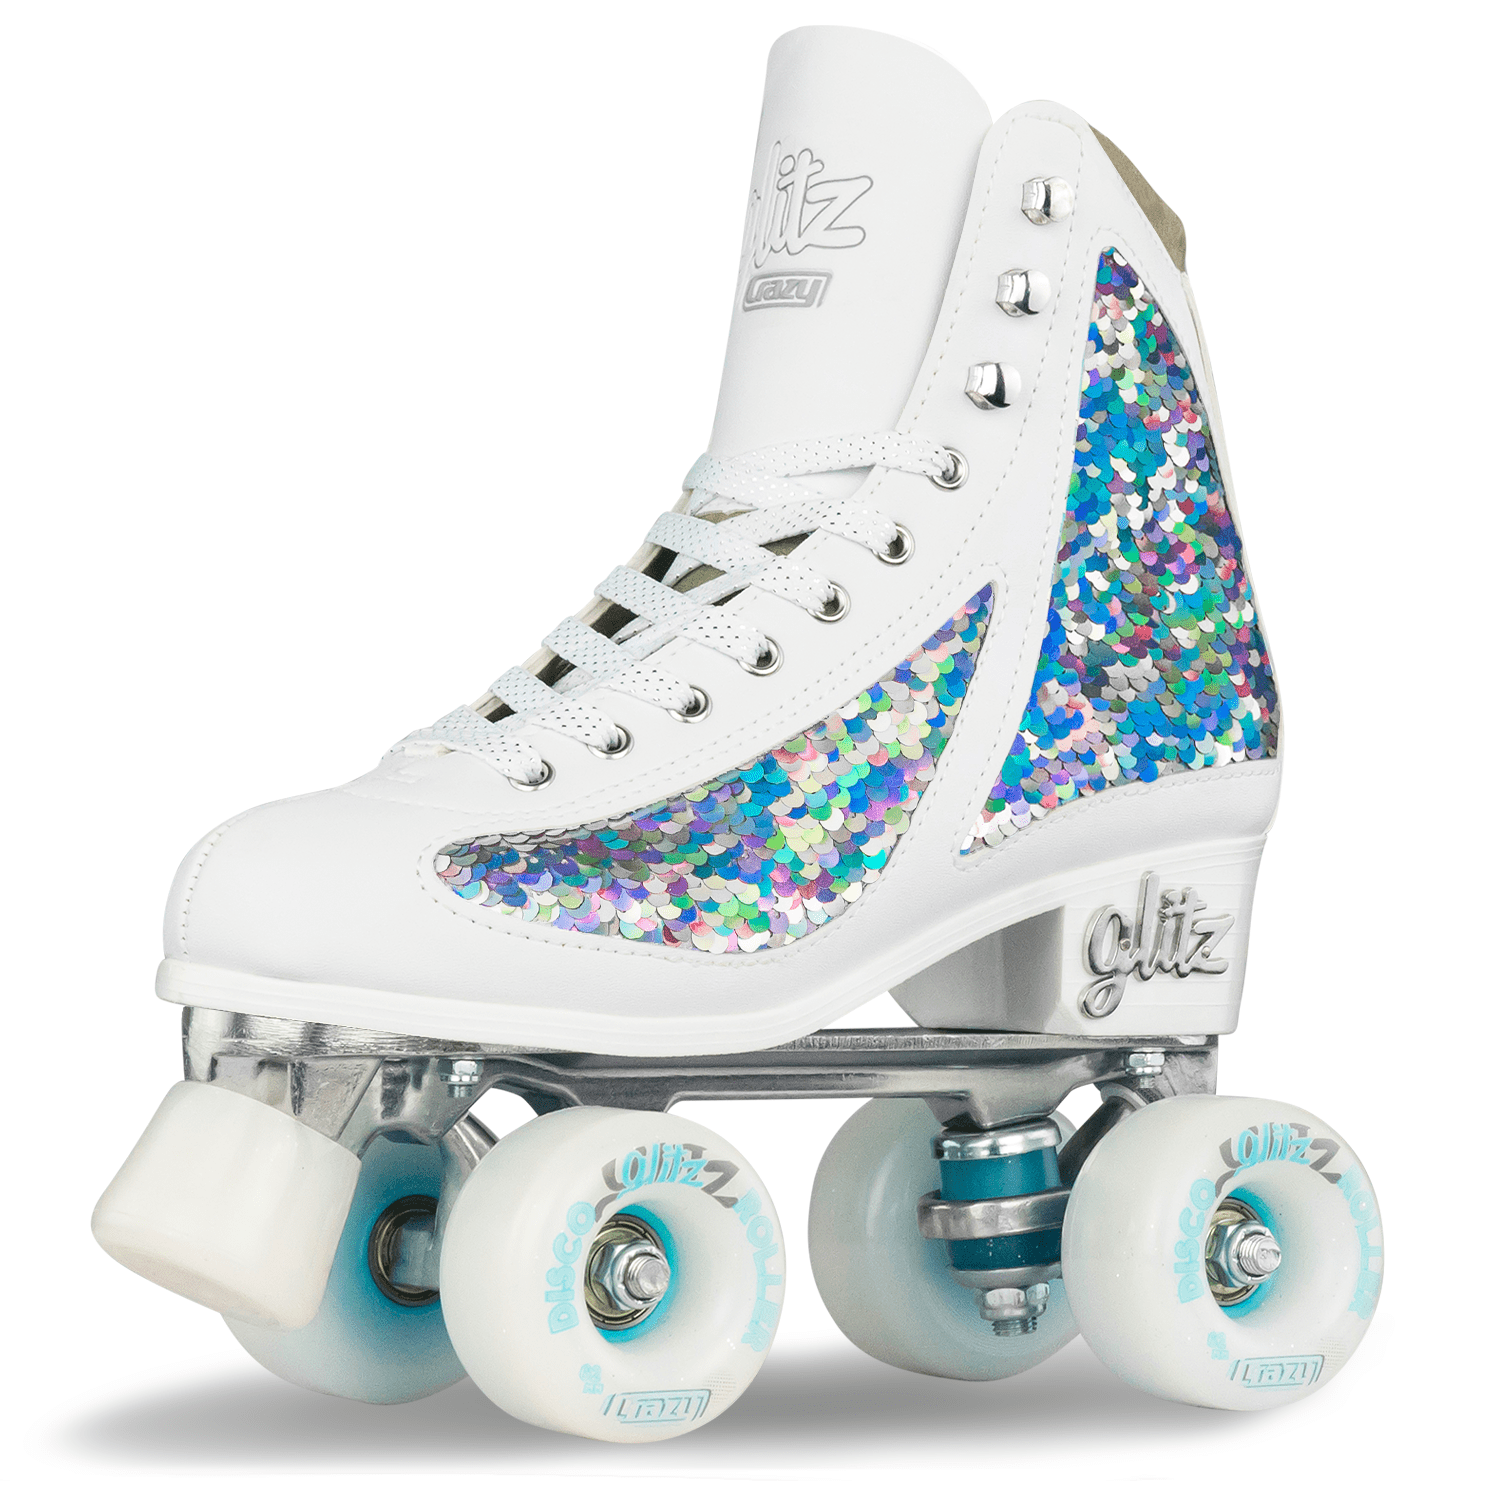 Michelle Stein Wheels and Jupiter T Bones Package Moxi Panther Roller Skates 